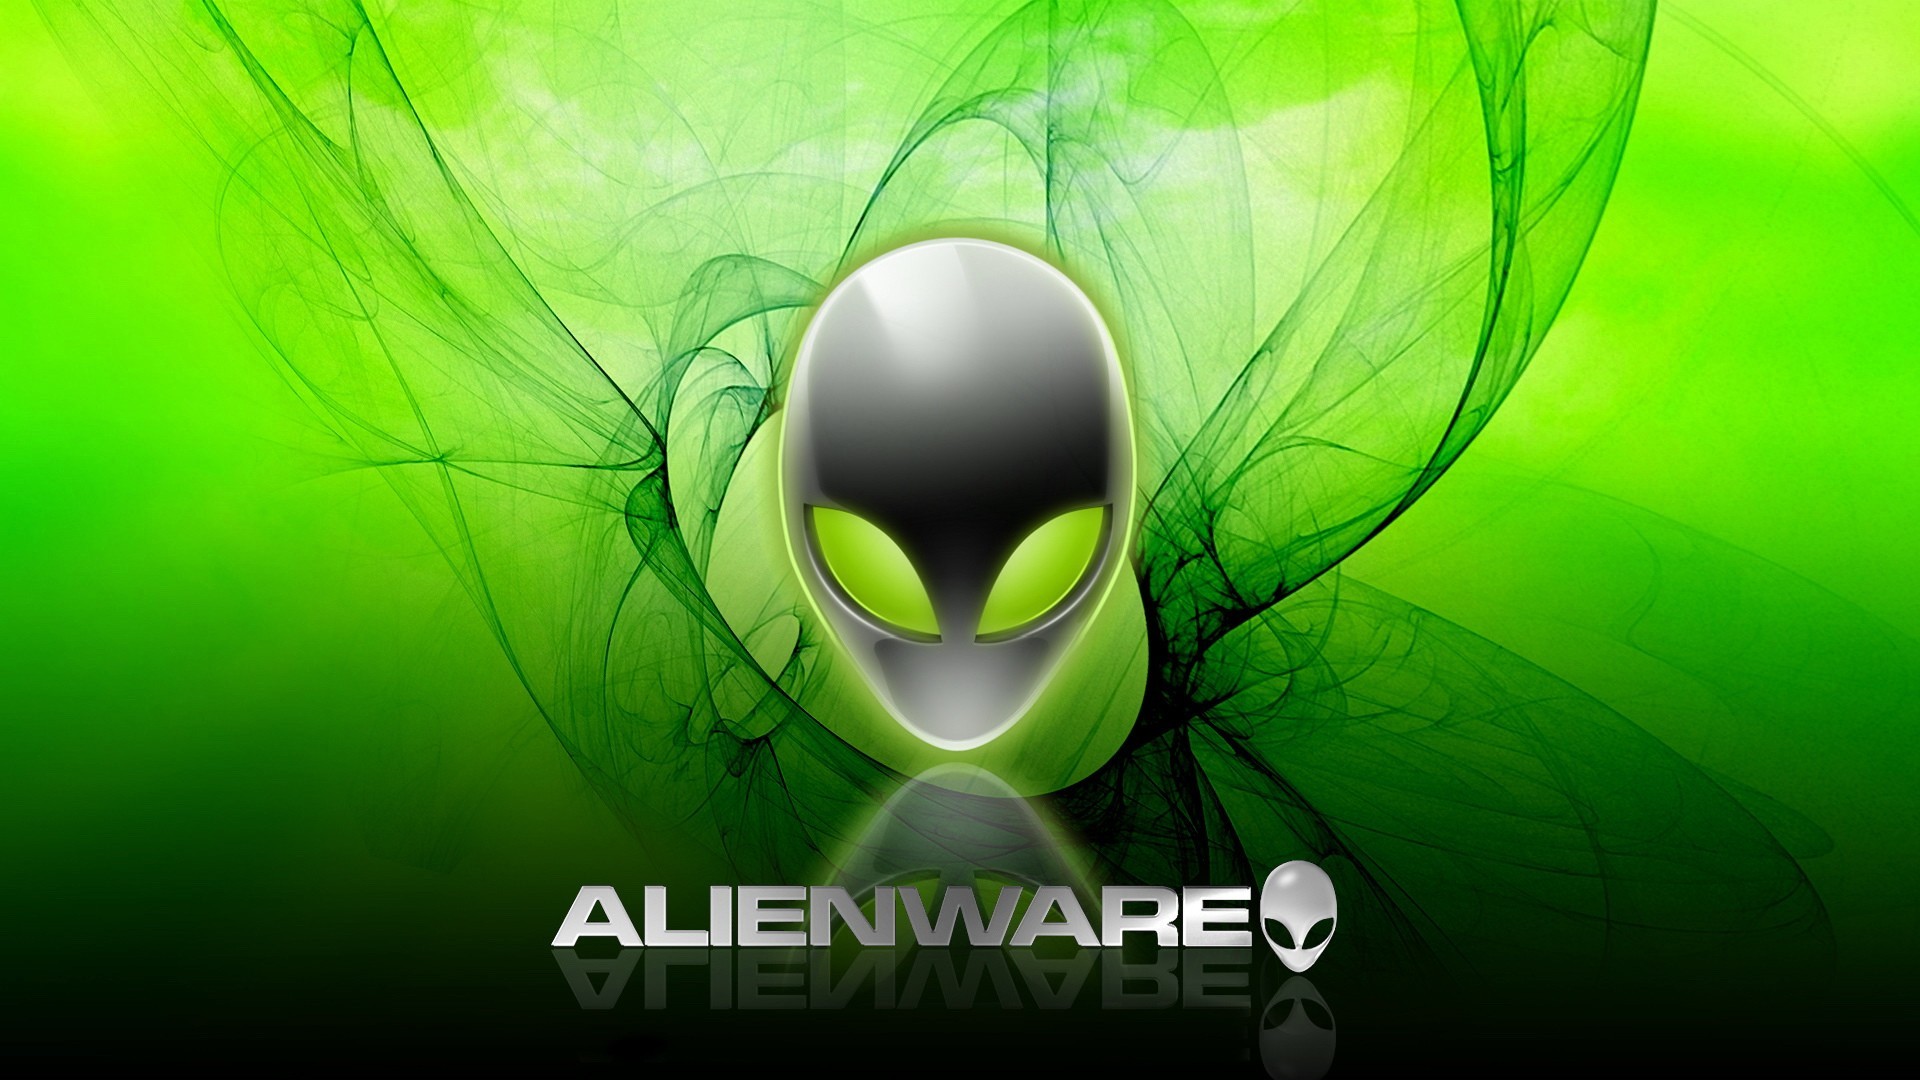 Alienware Hd Wallpapers | Free HD Desktop Wallpapers - Widescreen ...